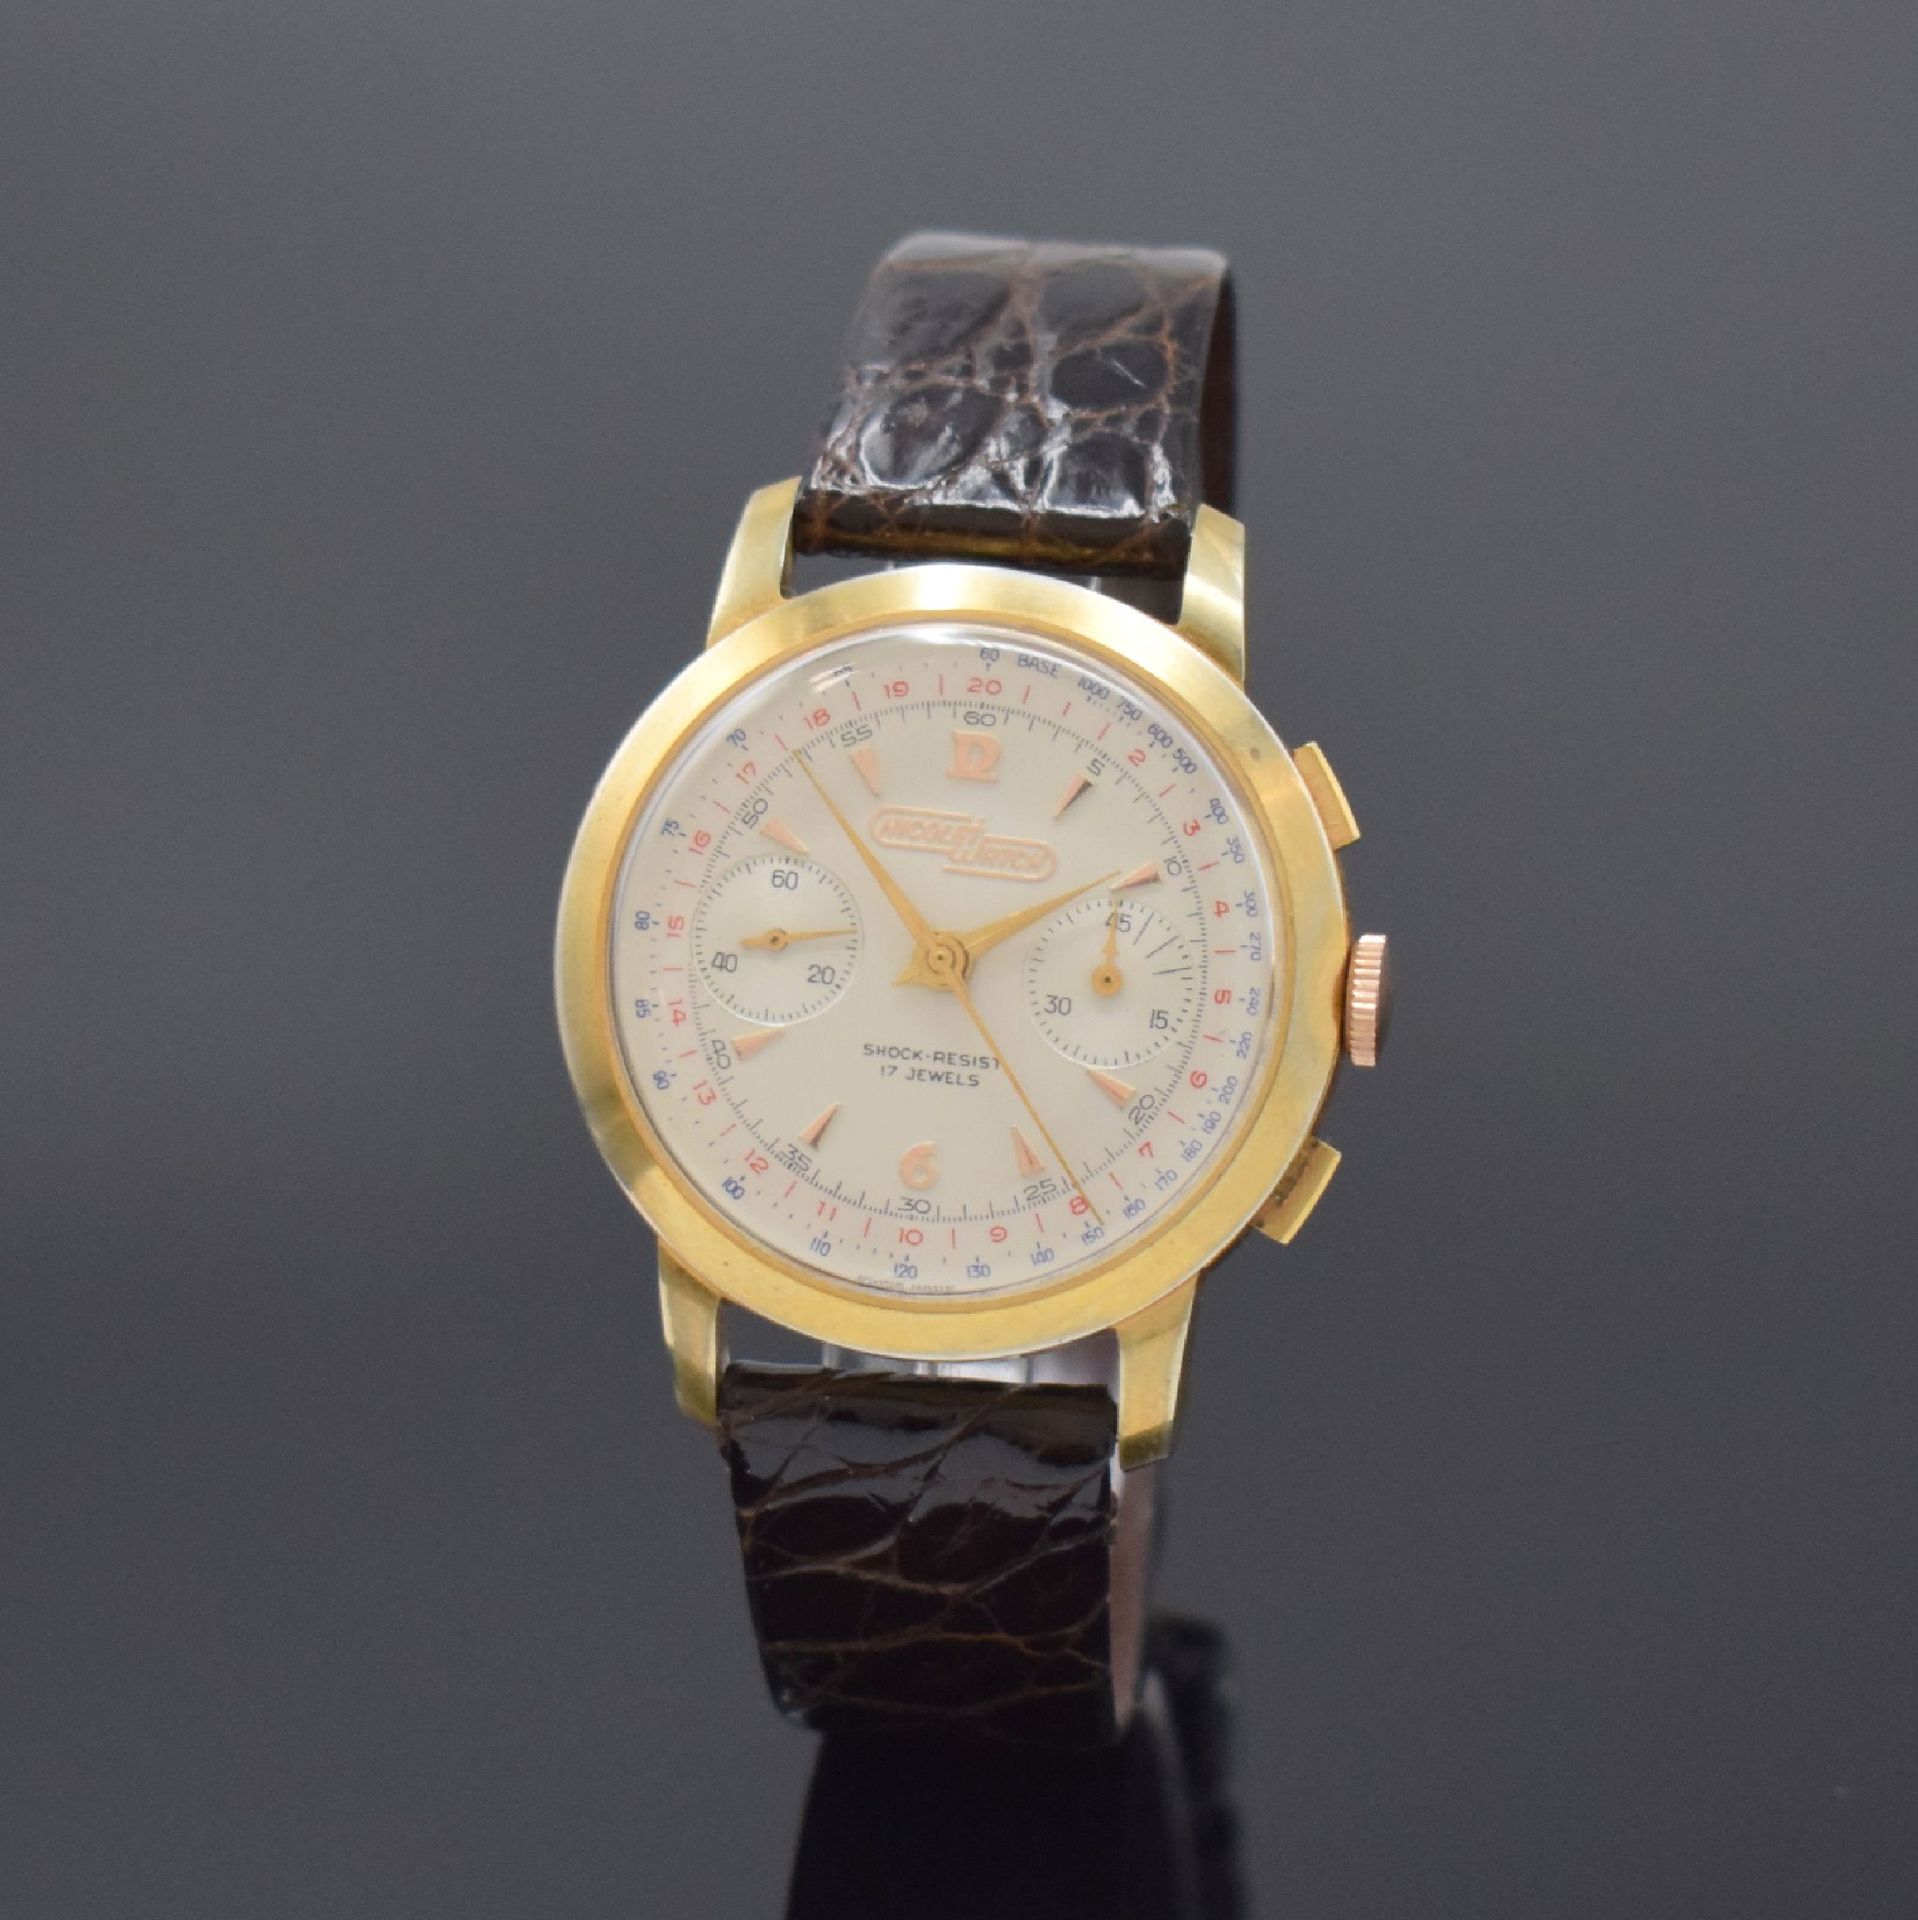 Null NICOLET WATCH chronographe pour homme, Suisse, vers 1960, remontage manuel,&hellip;